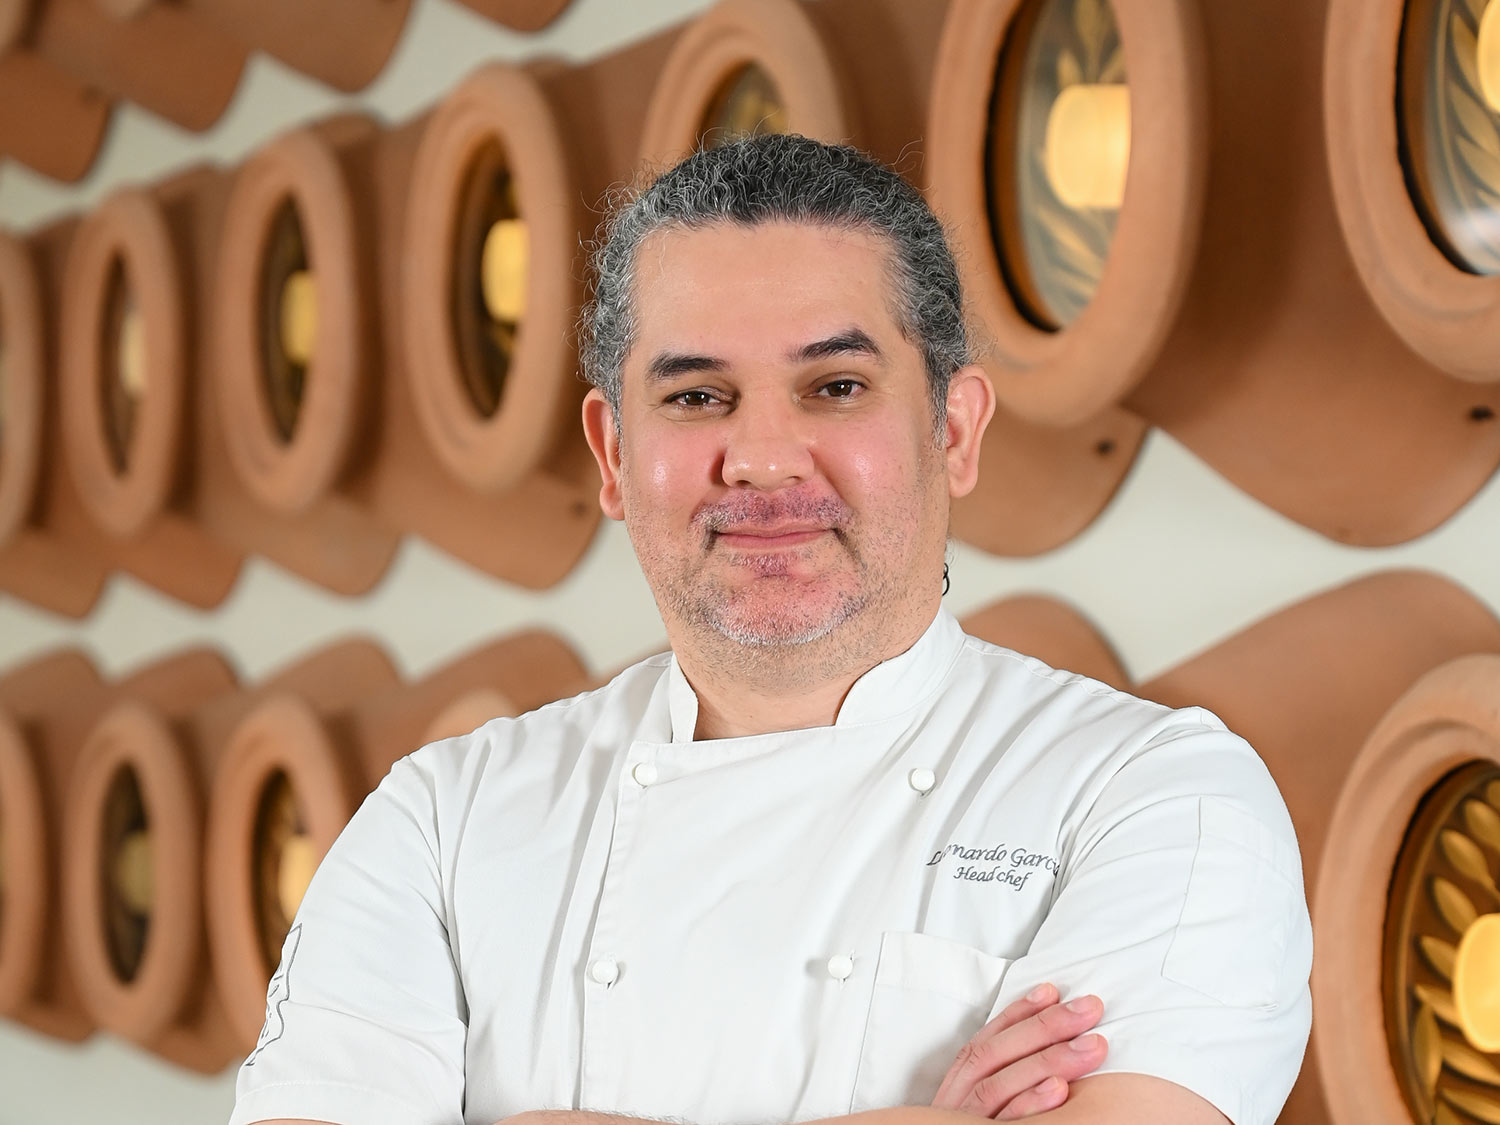 Leonardo Garcia Head Chef at Attic